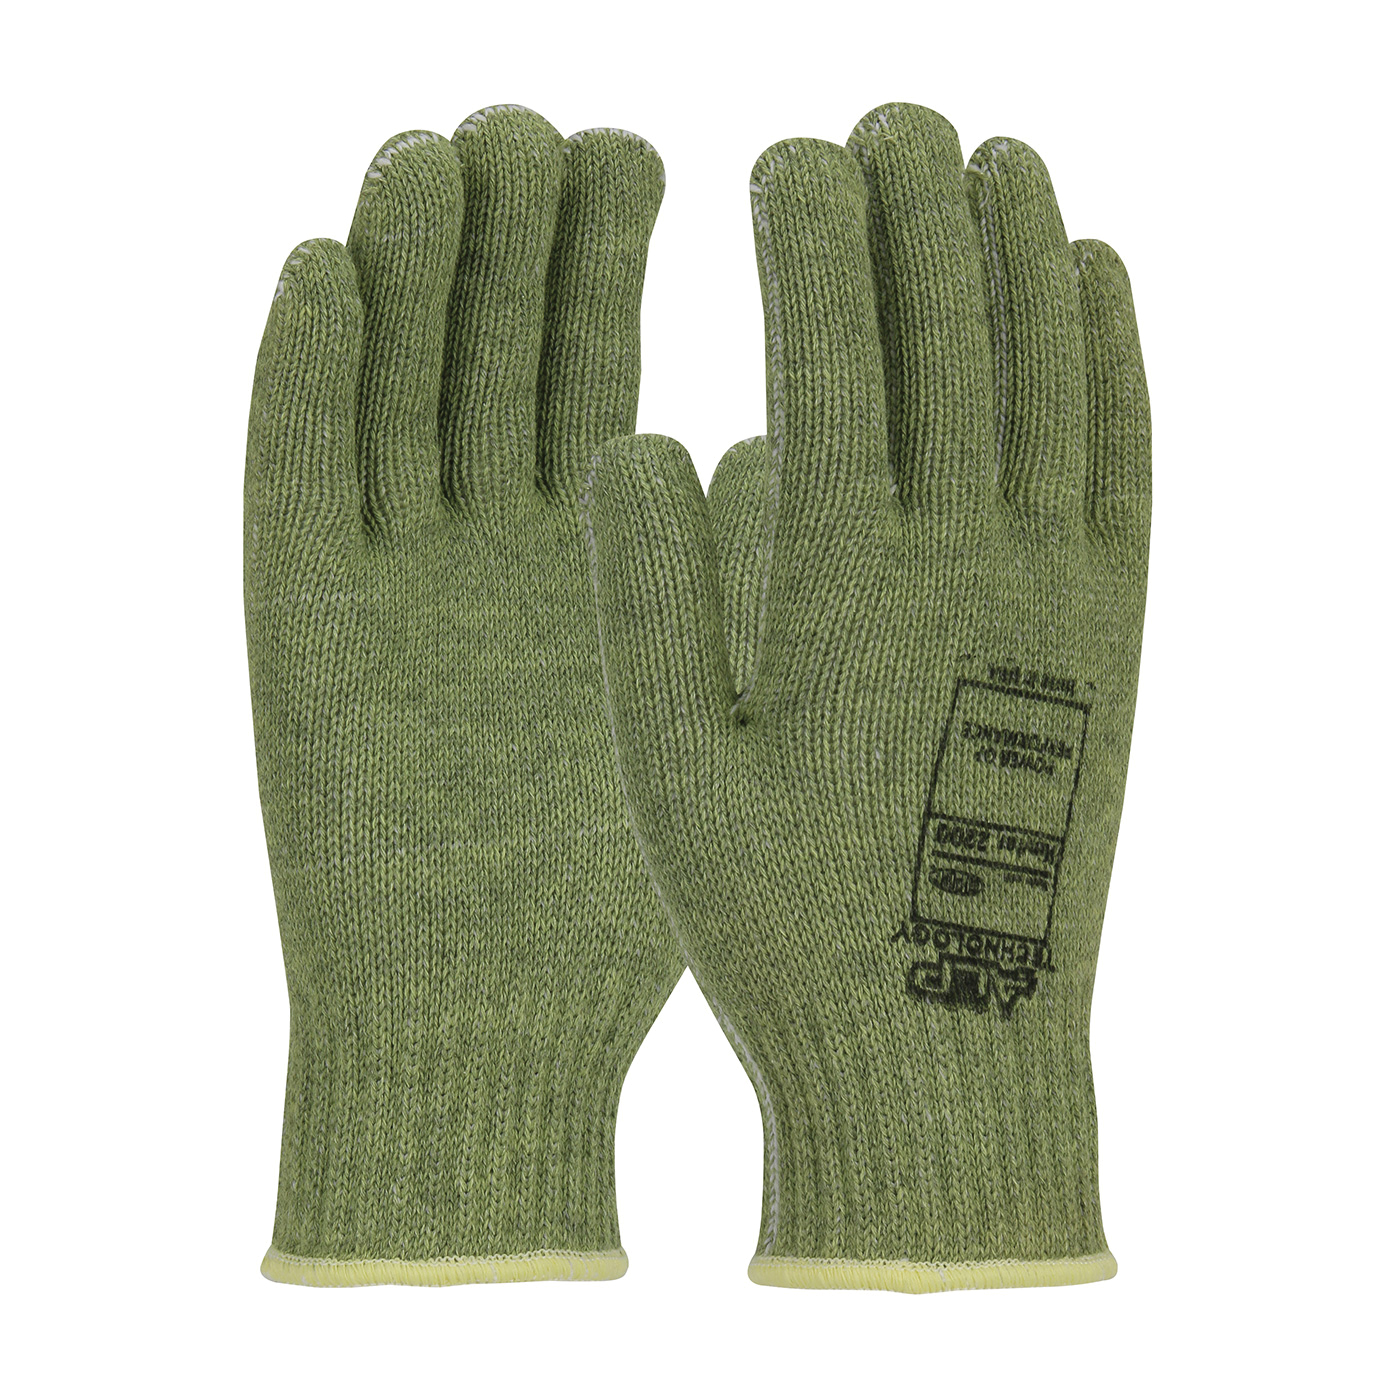 PIP® Kut-Gard® 07-K200/L Lightweight Cut Resistant Gloves, L, Uncoated Coating, DuPont™ Kevlar® Fiber, Elastic/Knit Wrist Cuff, Resists: Cut, Heat and Flame, ANSI Cut-Resistance Level: A2